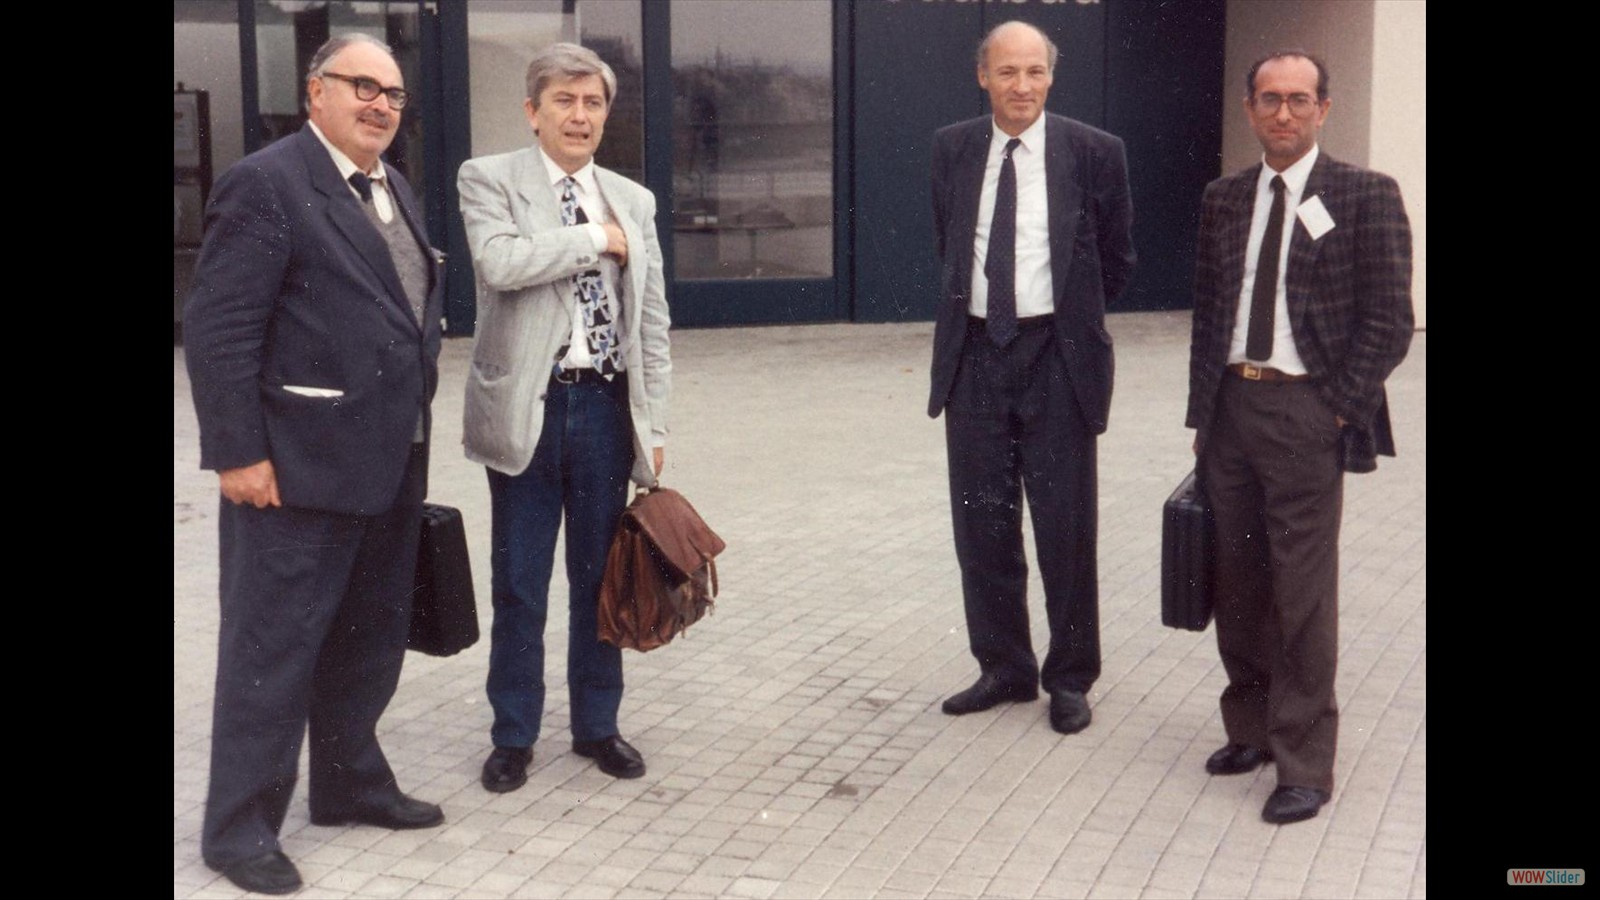 AFCAT-AICAT-STK Joint Conference - Basel 17-21 September 1989 (Barone, Della Gatta, Marti, Abate)